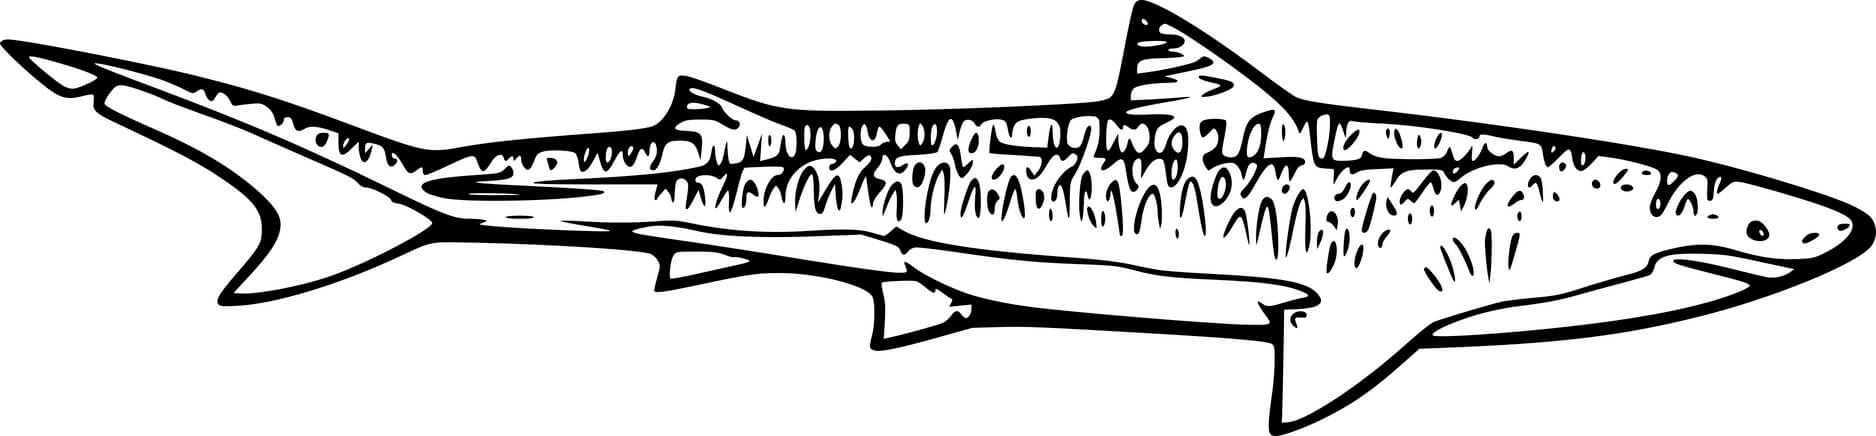 Sand Tiger Shark